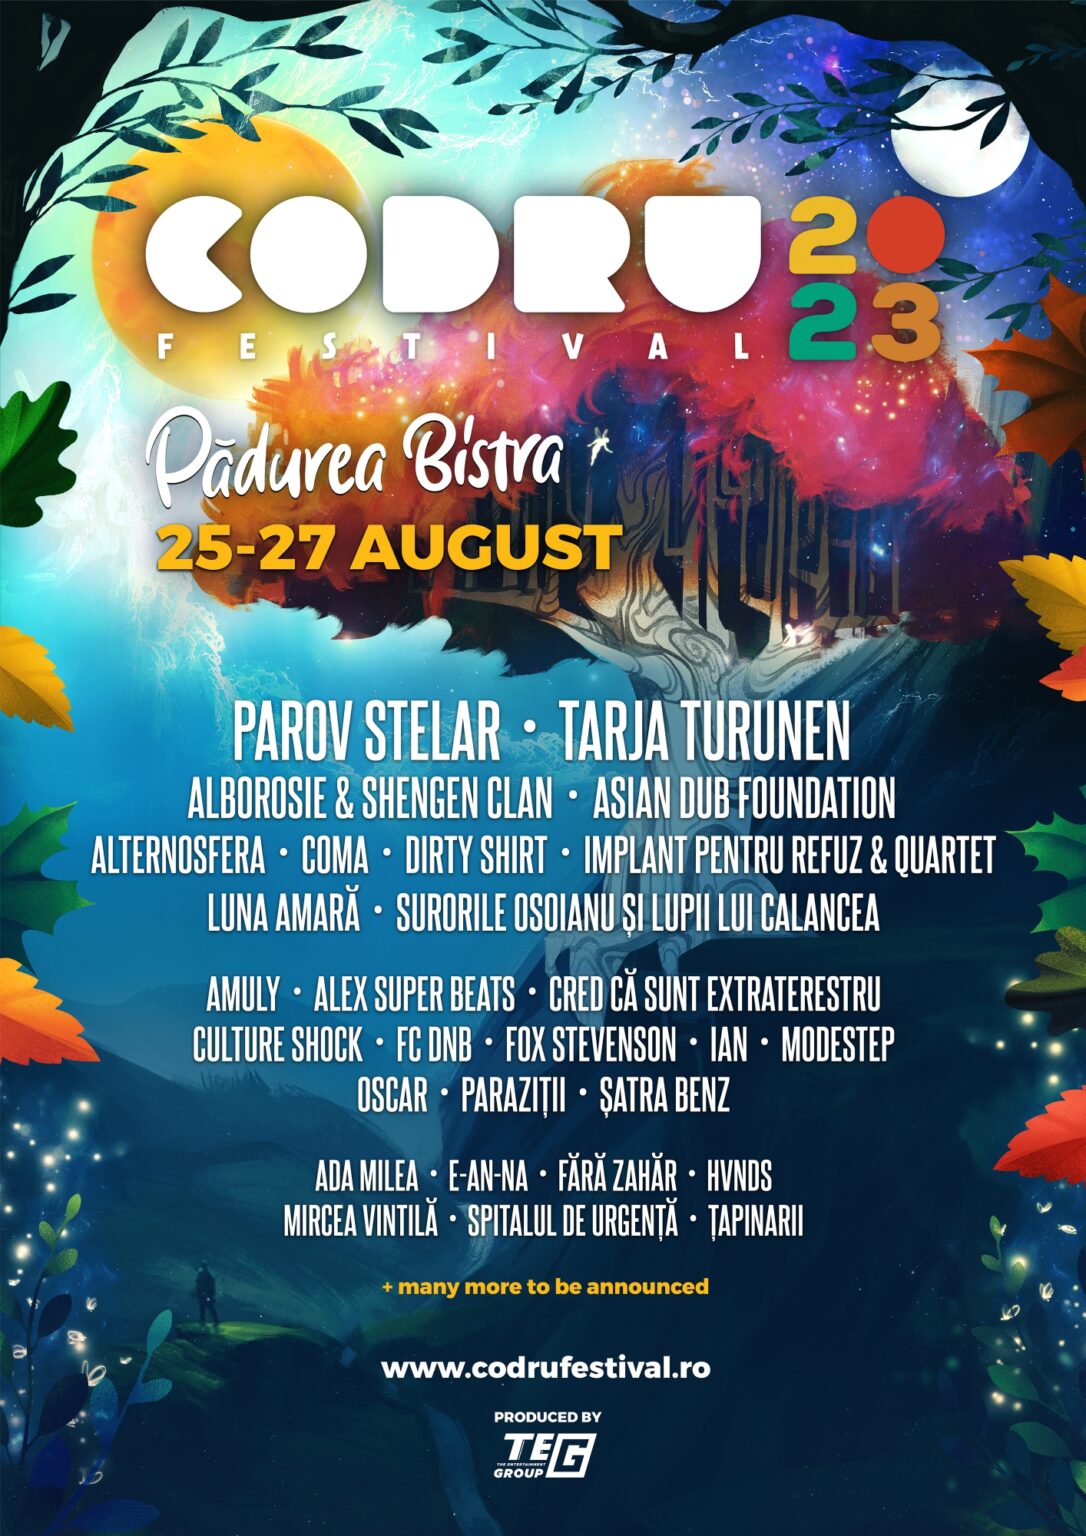 Tarja Turunen | Padurea Vistra, Romania – Codru Festival 2023